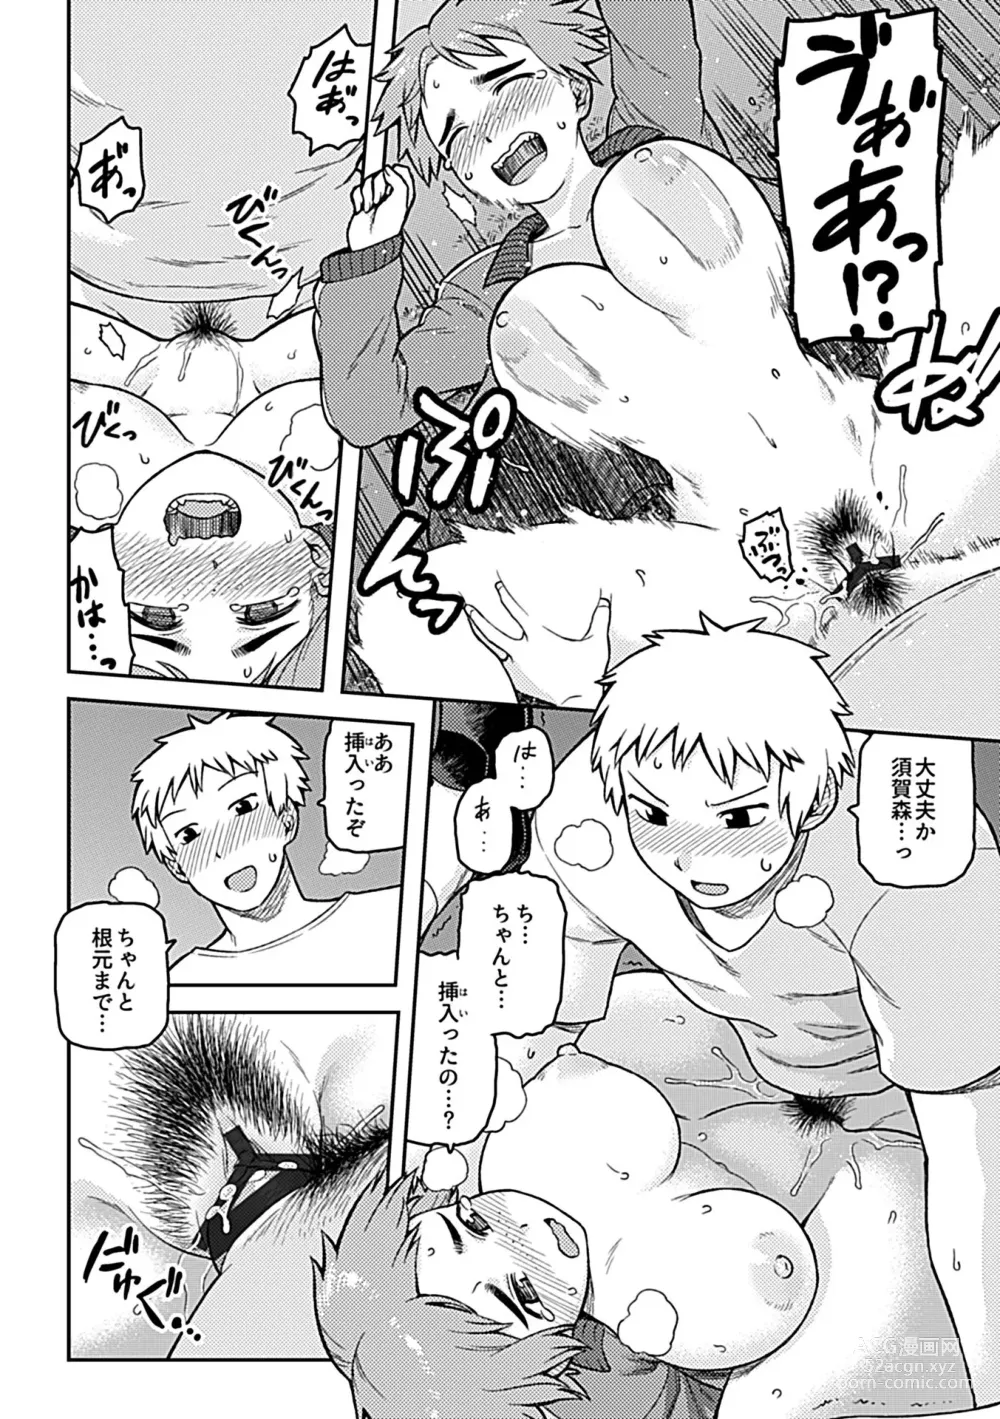 Page 22 of manga Aibiki